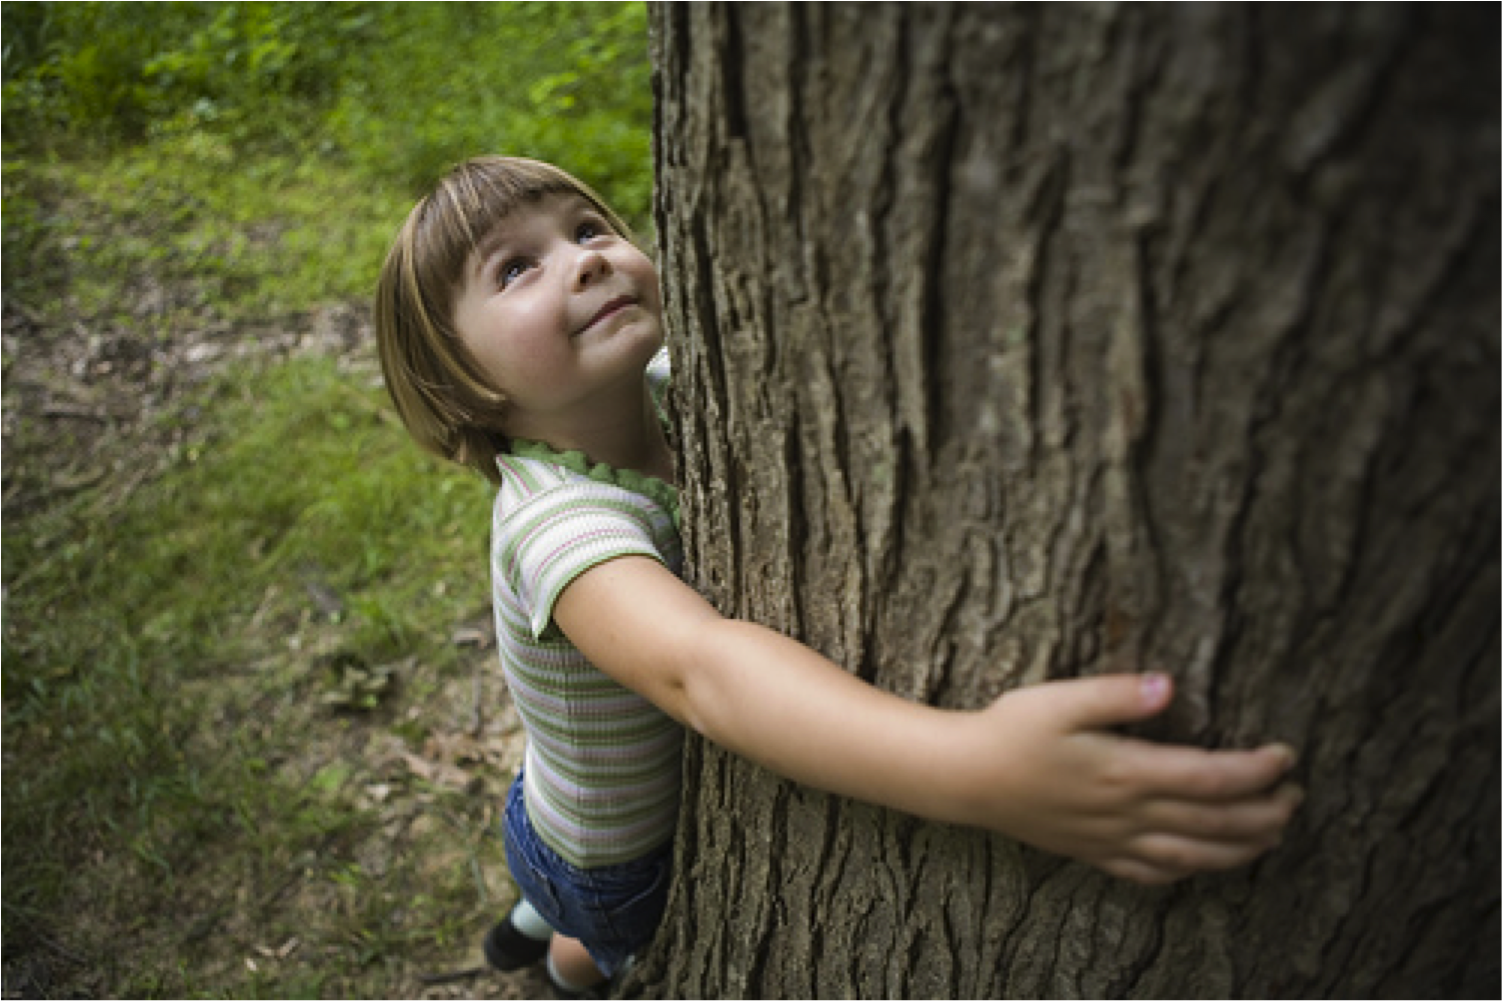 Be close to nature. Дерево для детей. Дети и природа. Природа деревьев для детей. Любовь детей к природе.